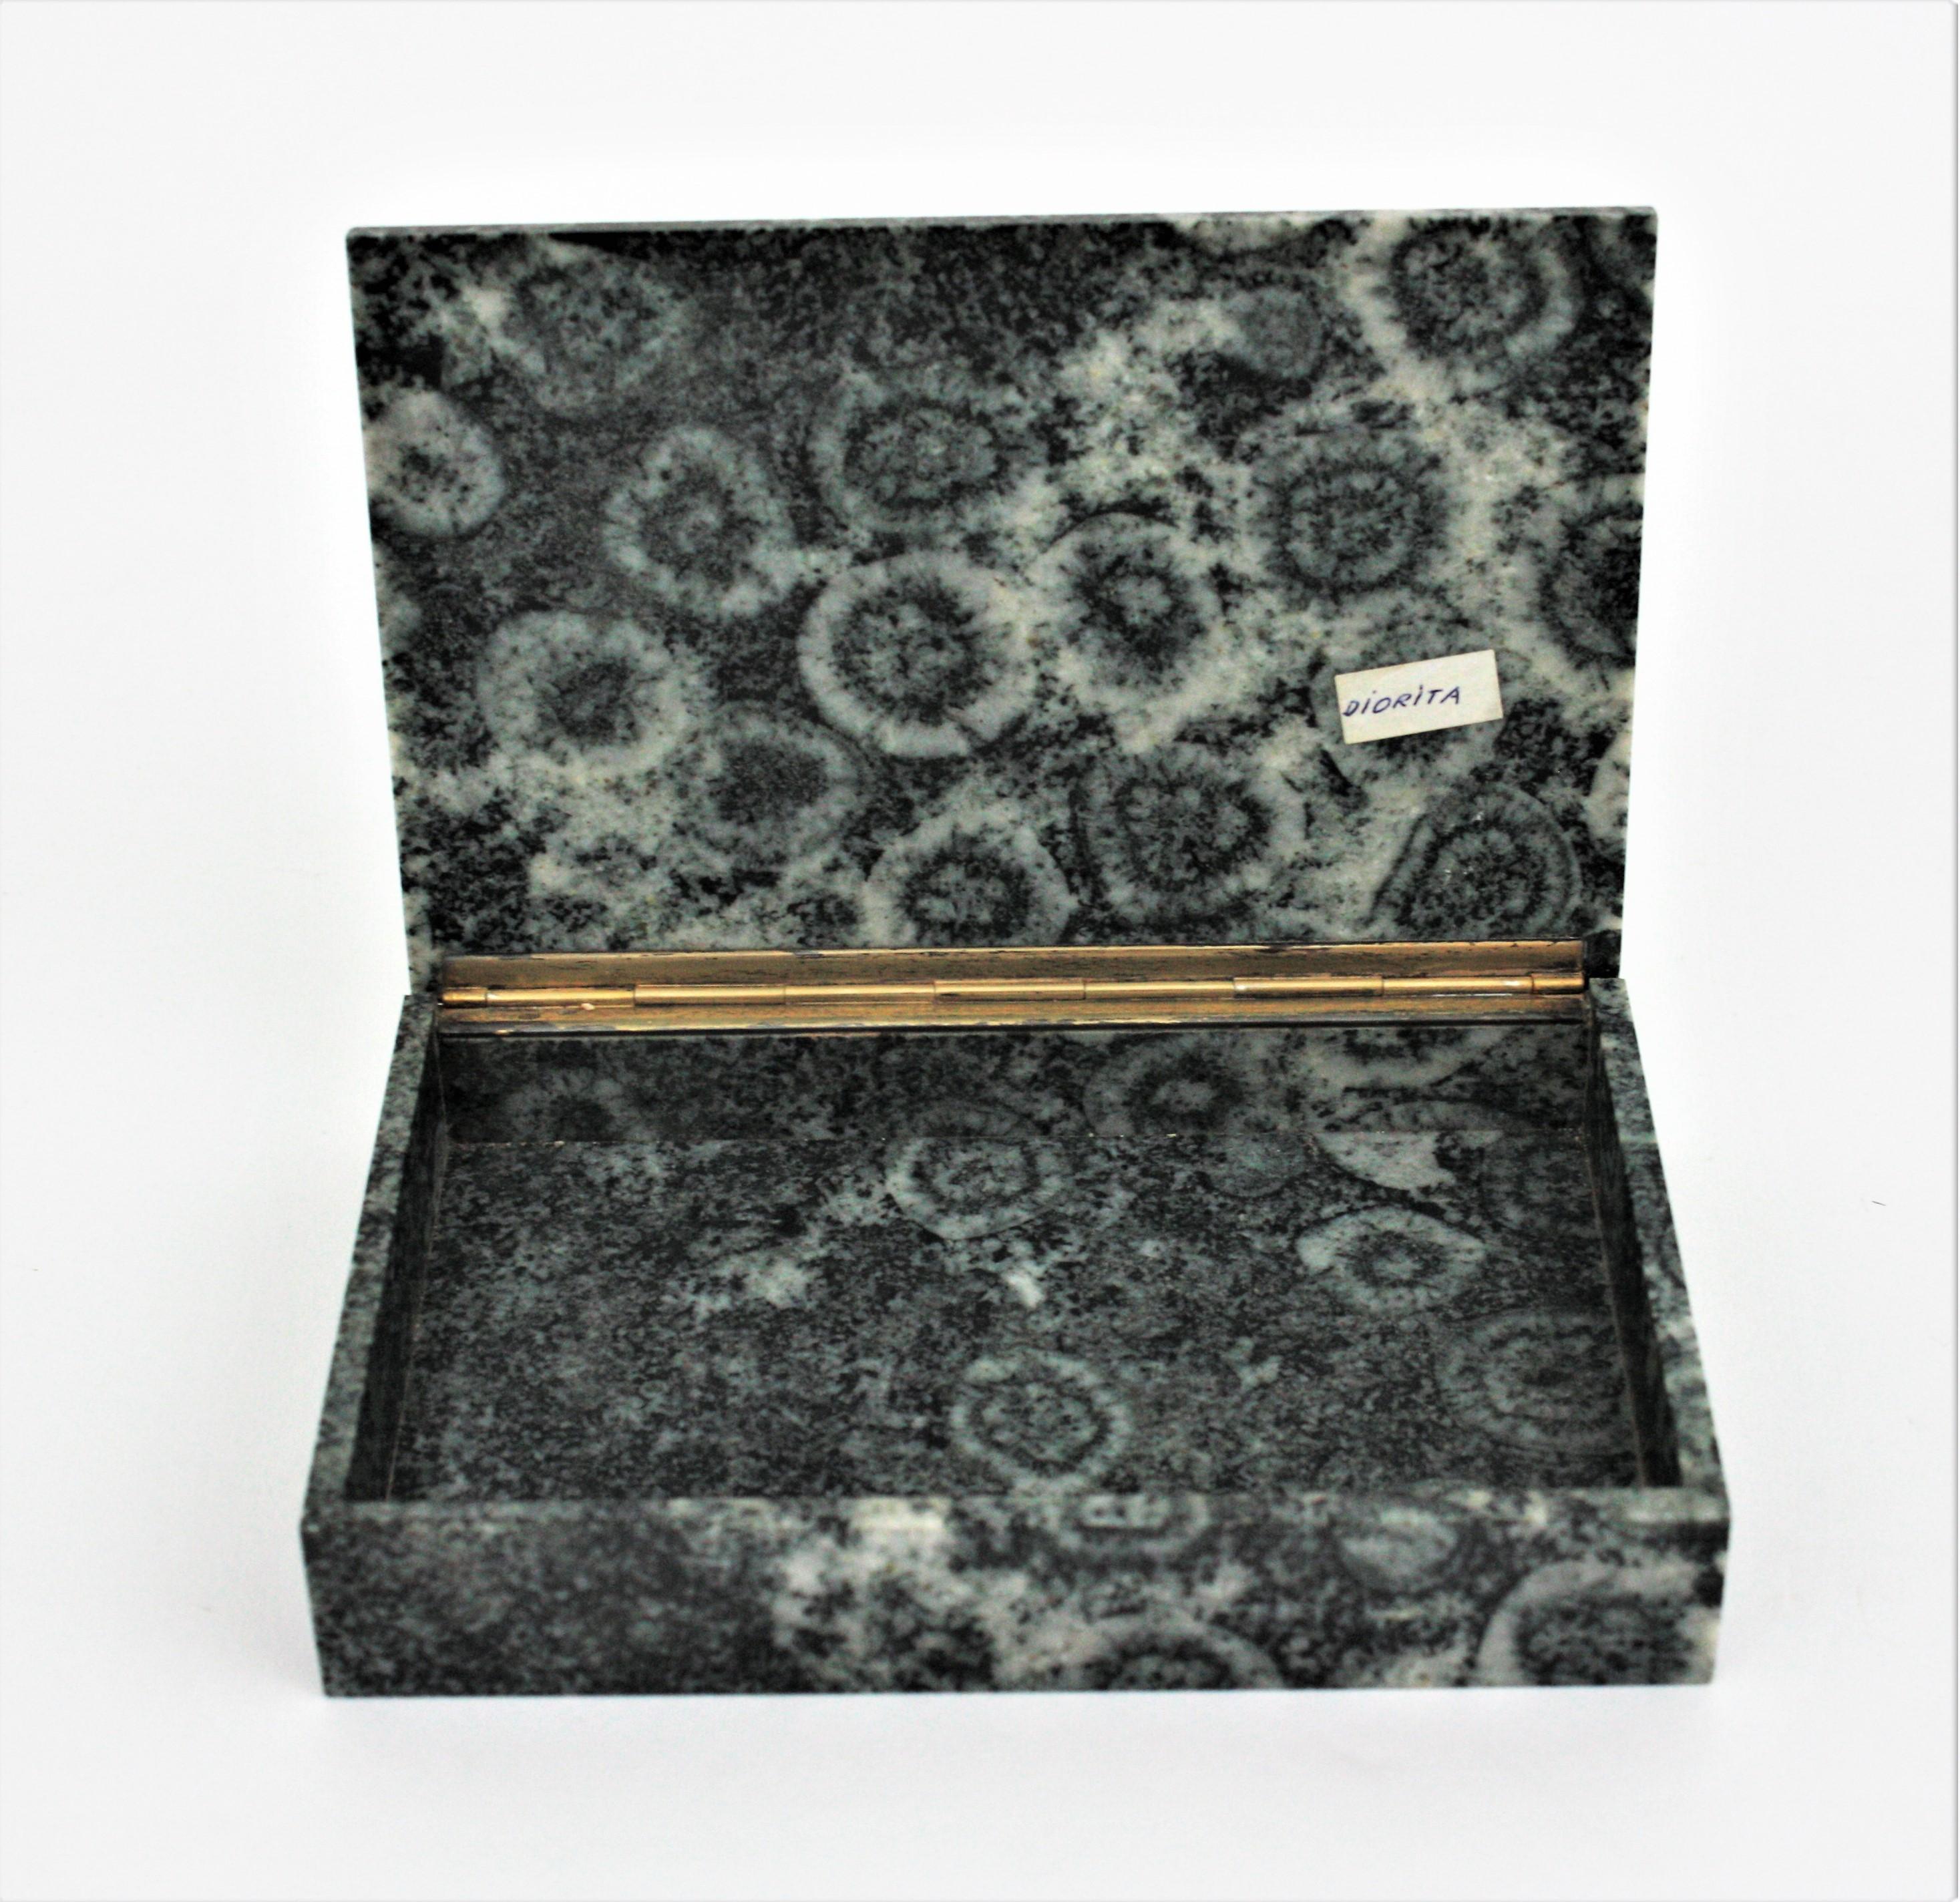 Mid-Century Modern 1950s Diorite Mineral Jewelry or Trinket Box